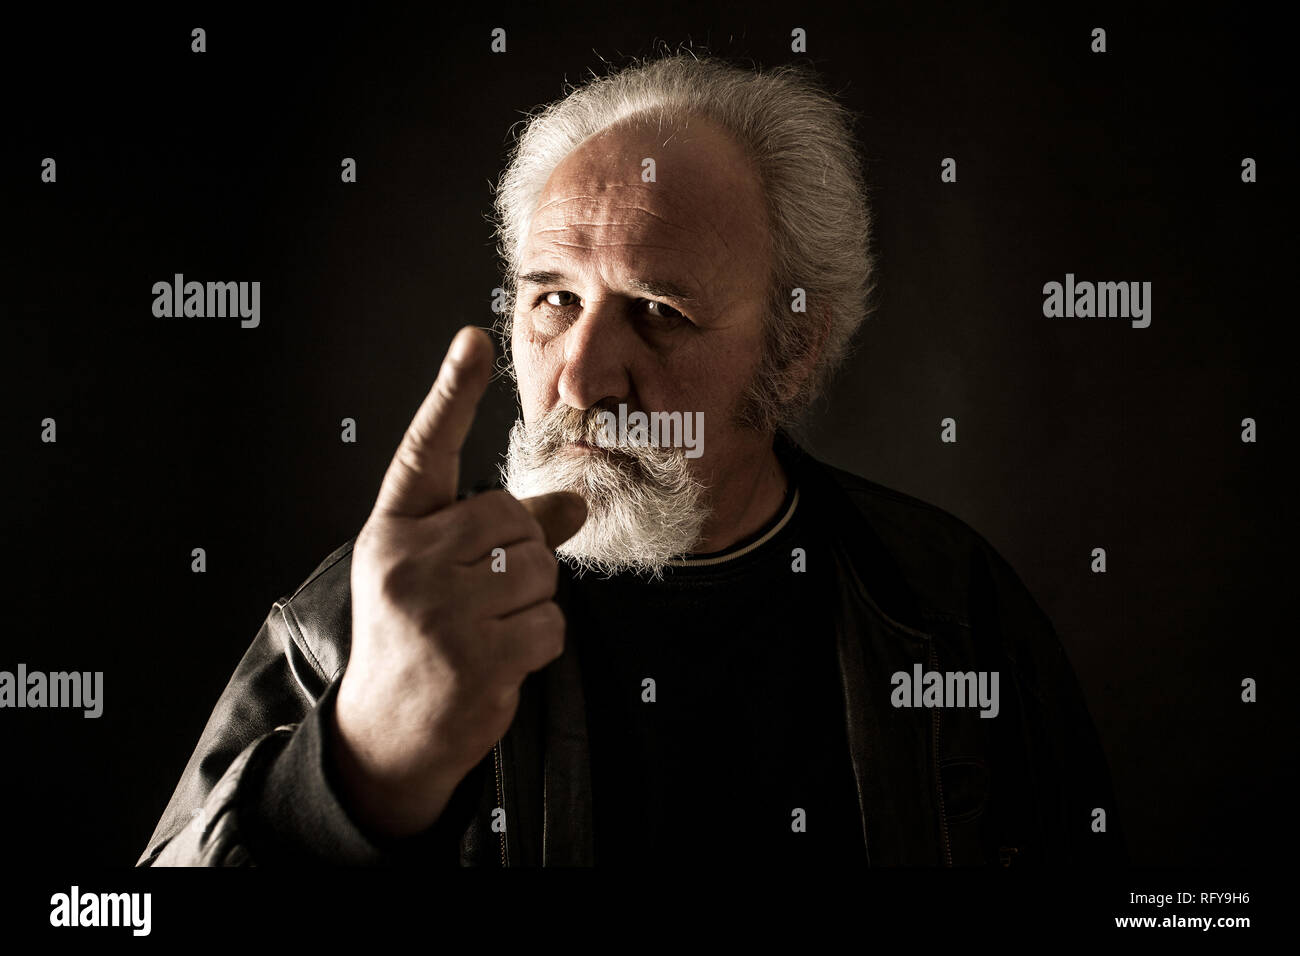 Grumpy man against black background Stock Photo